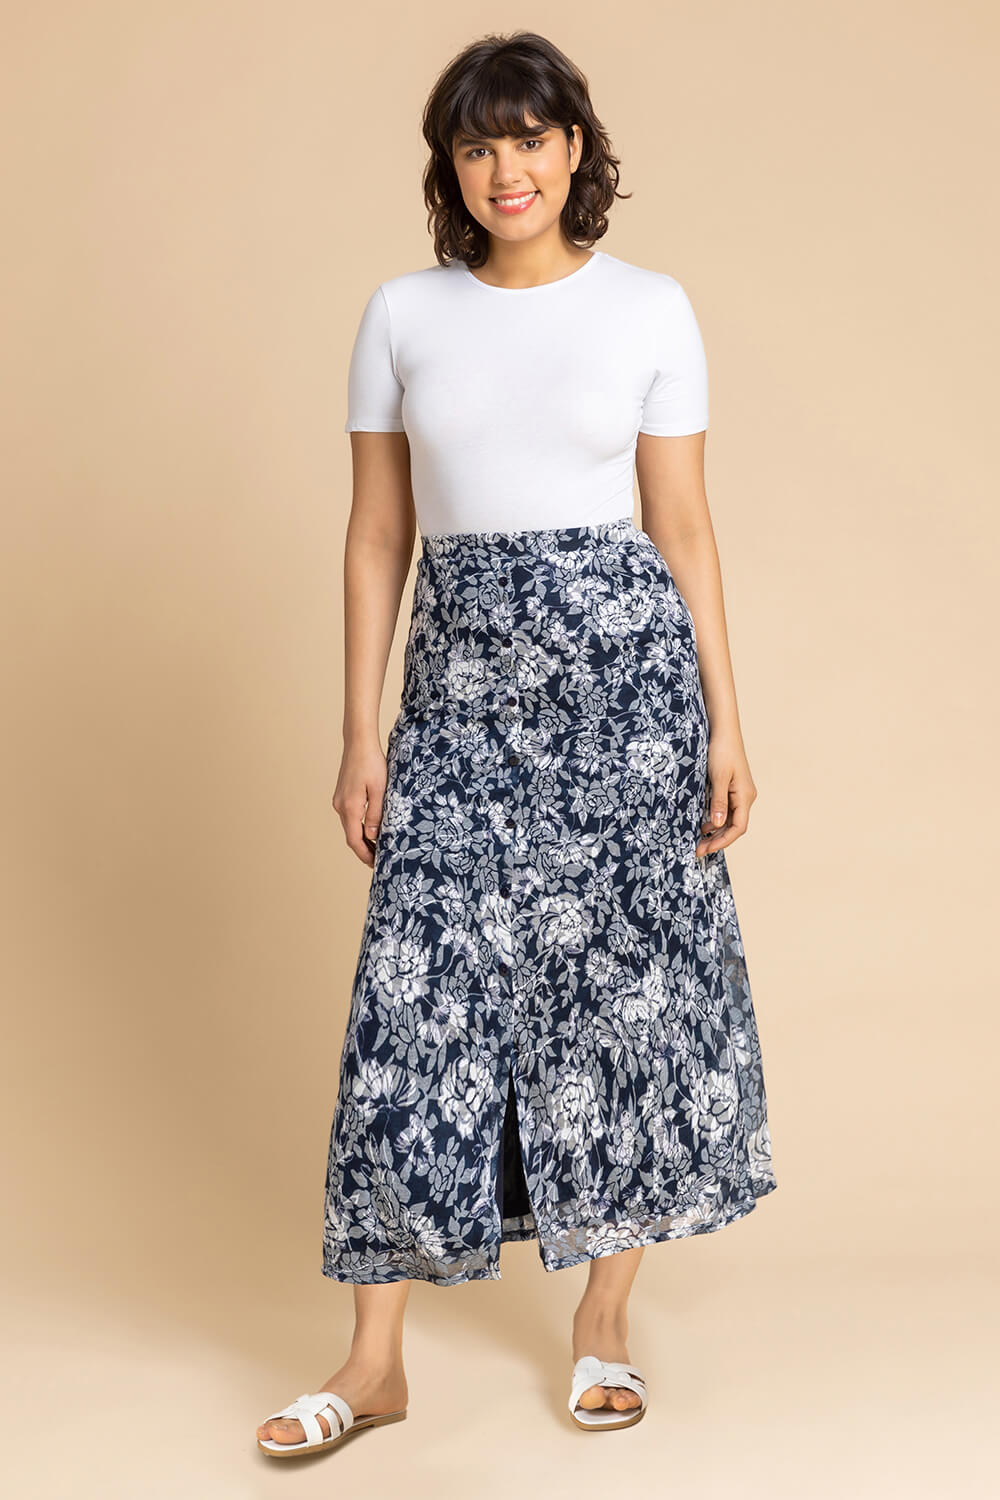 Floral Burnout Buttoned Midi Skirt in Navy - Roman Originals UK